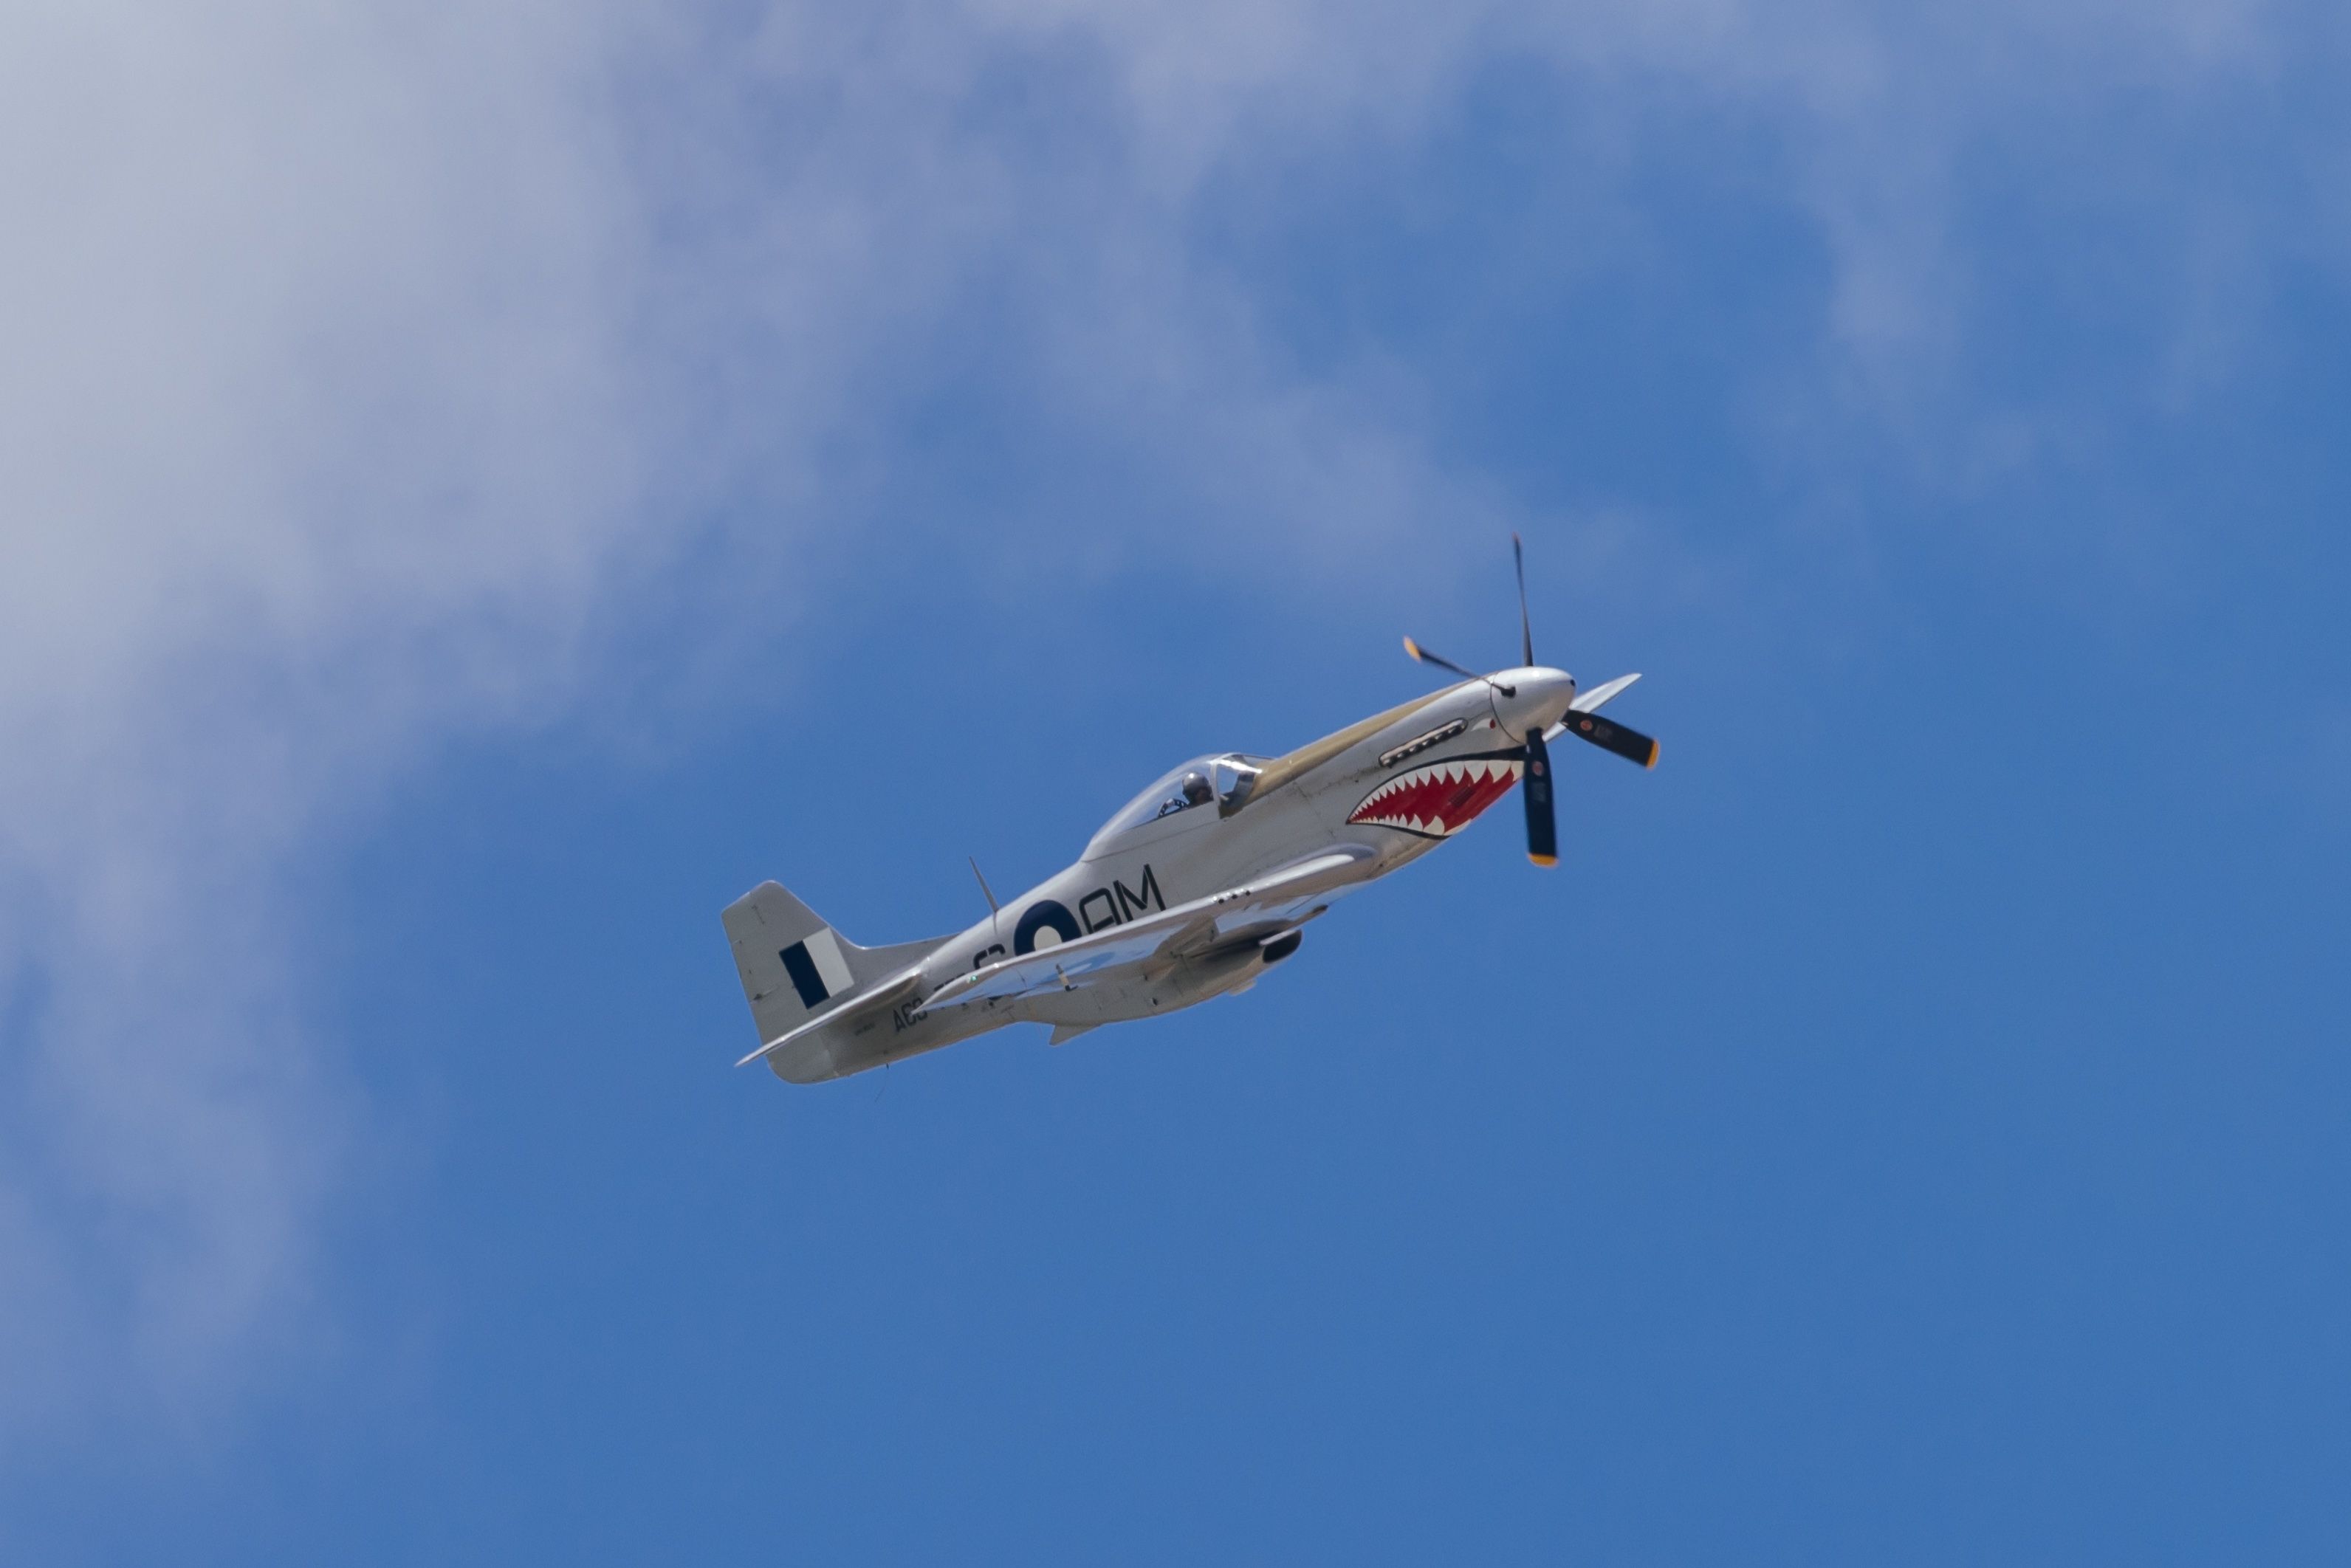 An RAAF P-51 Mustang flying in the sky.